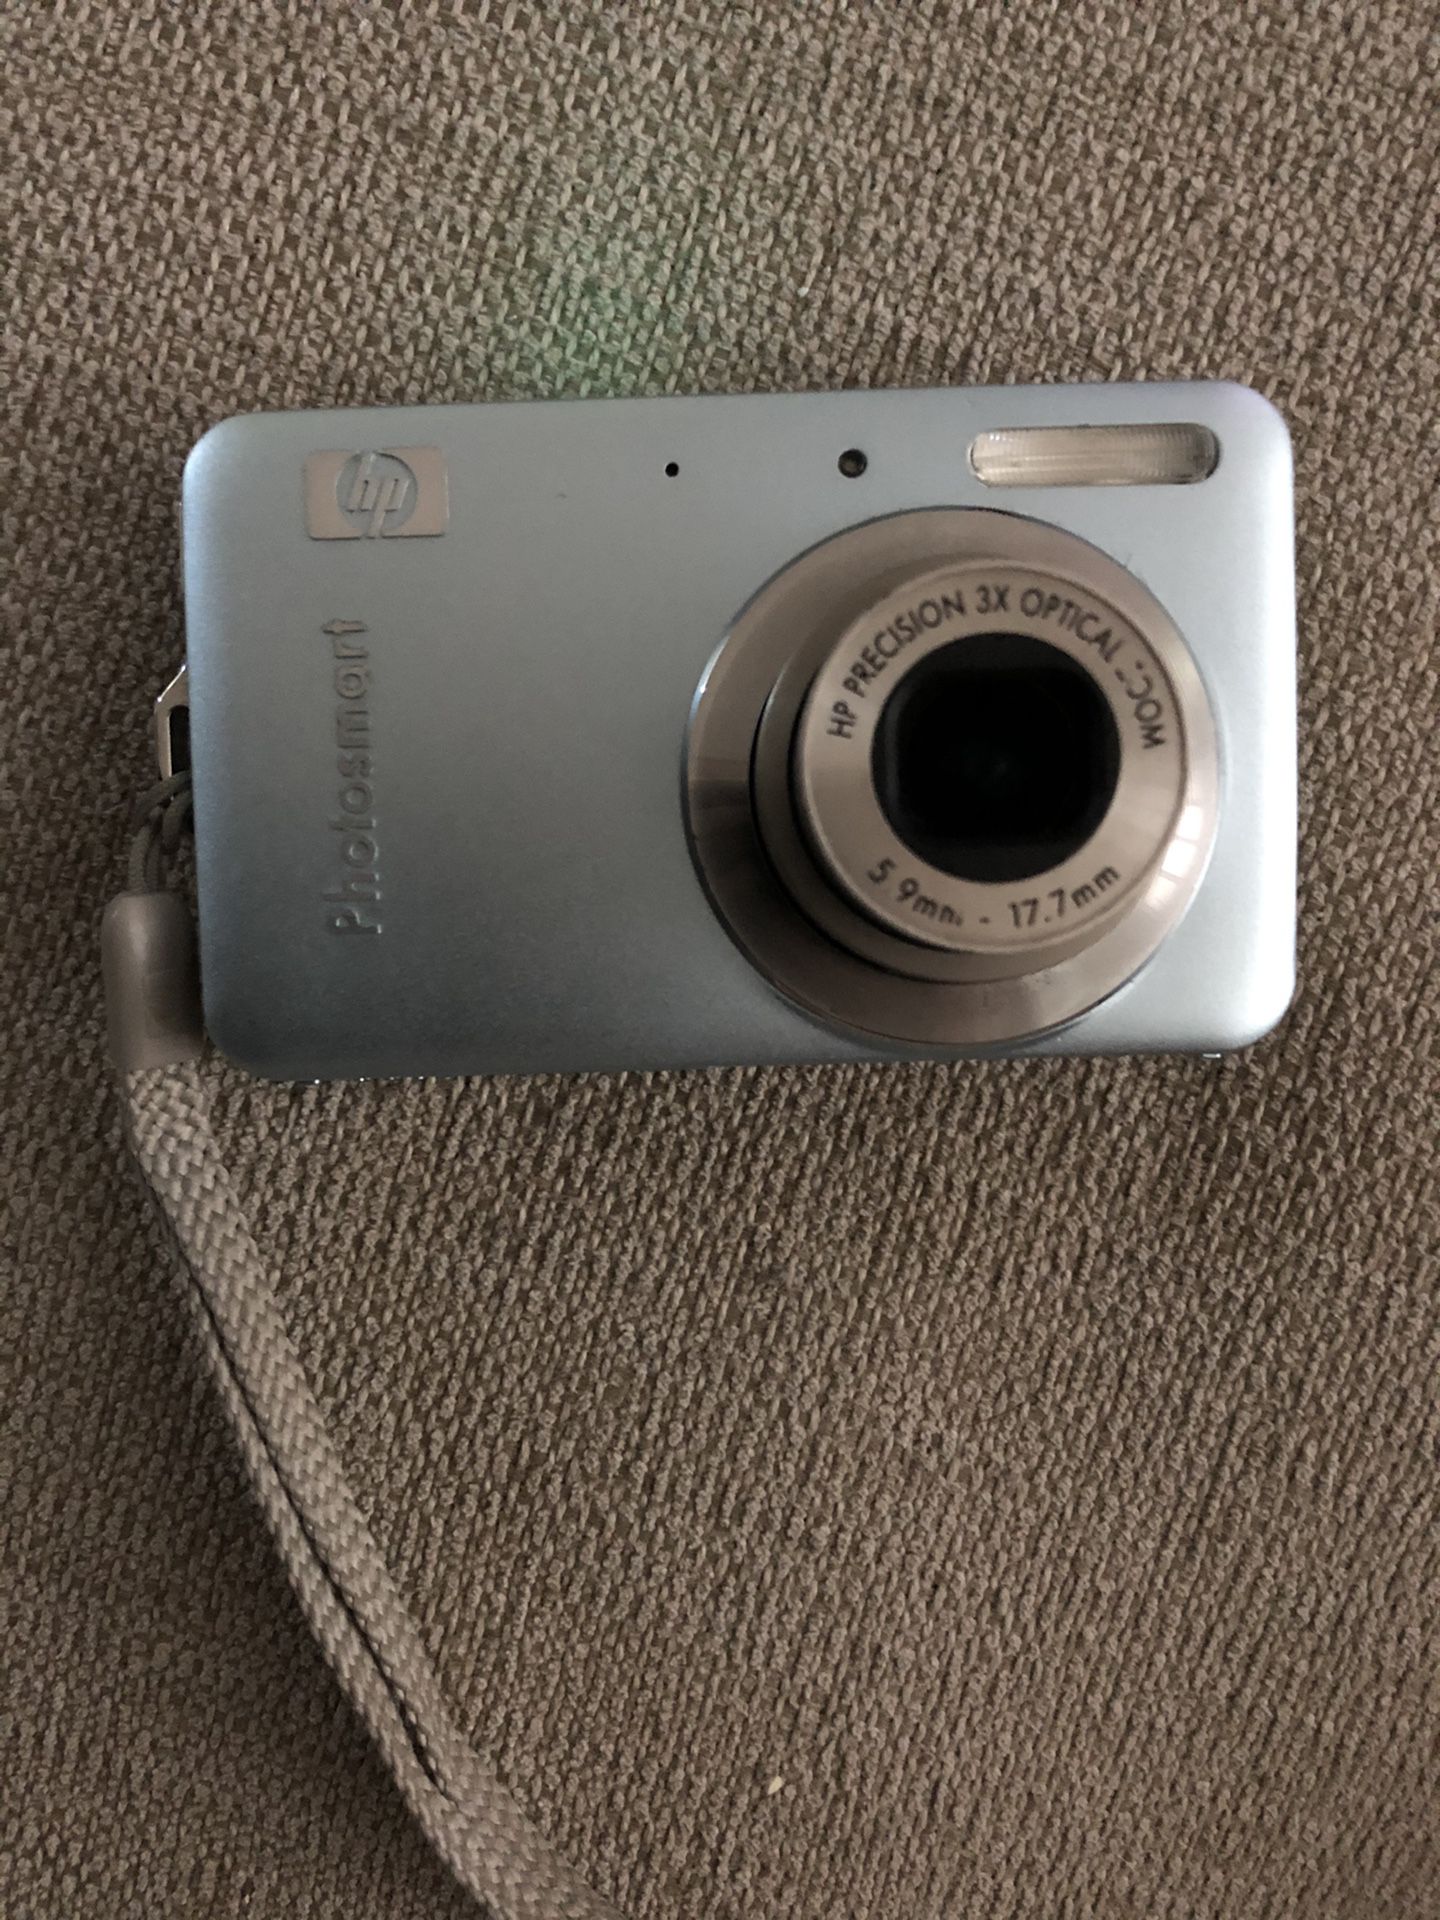 HP Photosmart 7.0 MP digital camera with accessories